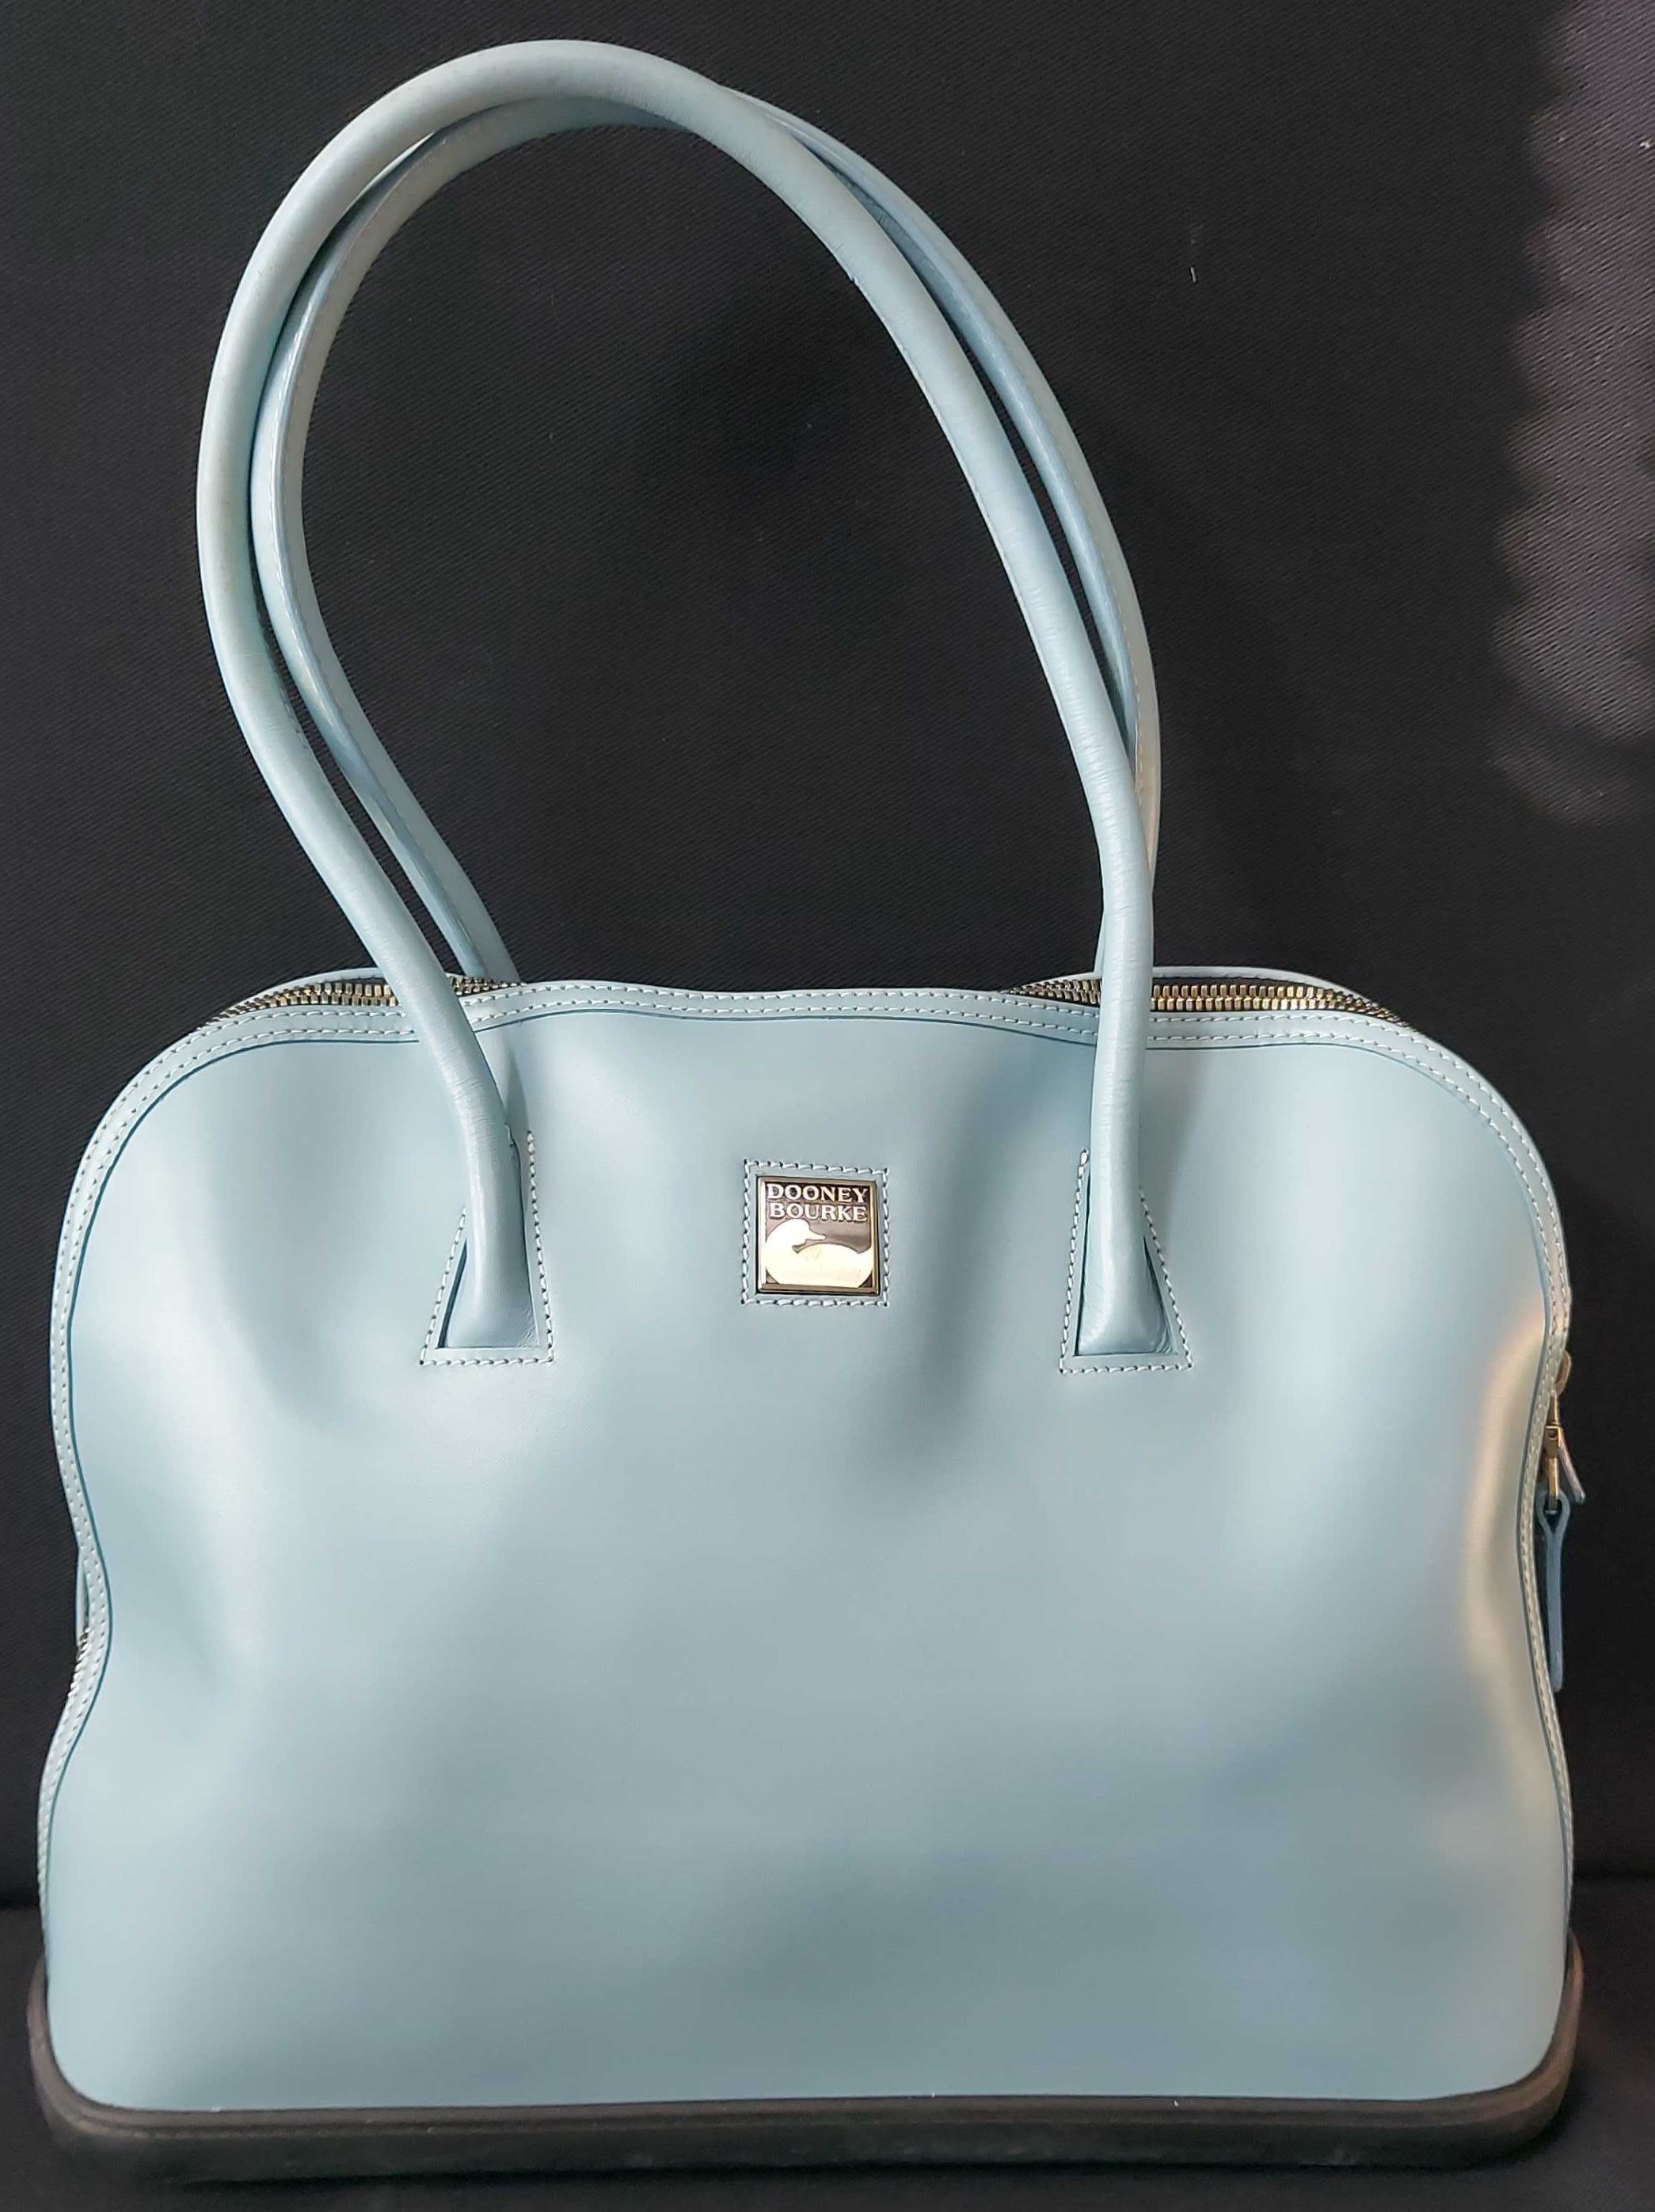 The beautiful Dooney & Bourke purse : r/ThriftStoreHauls